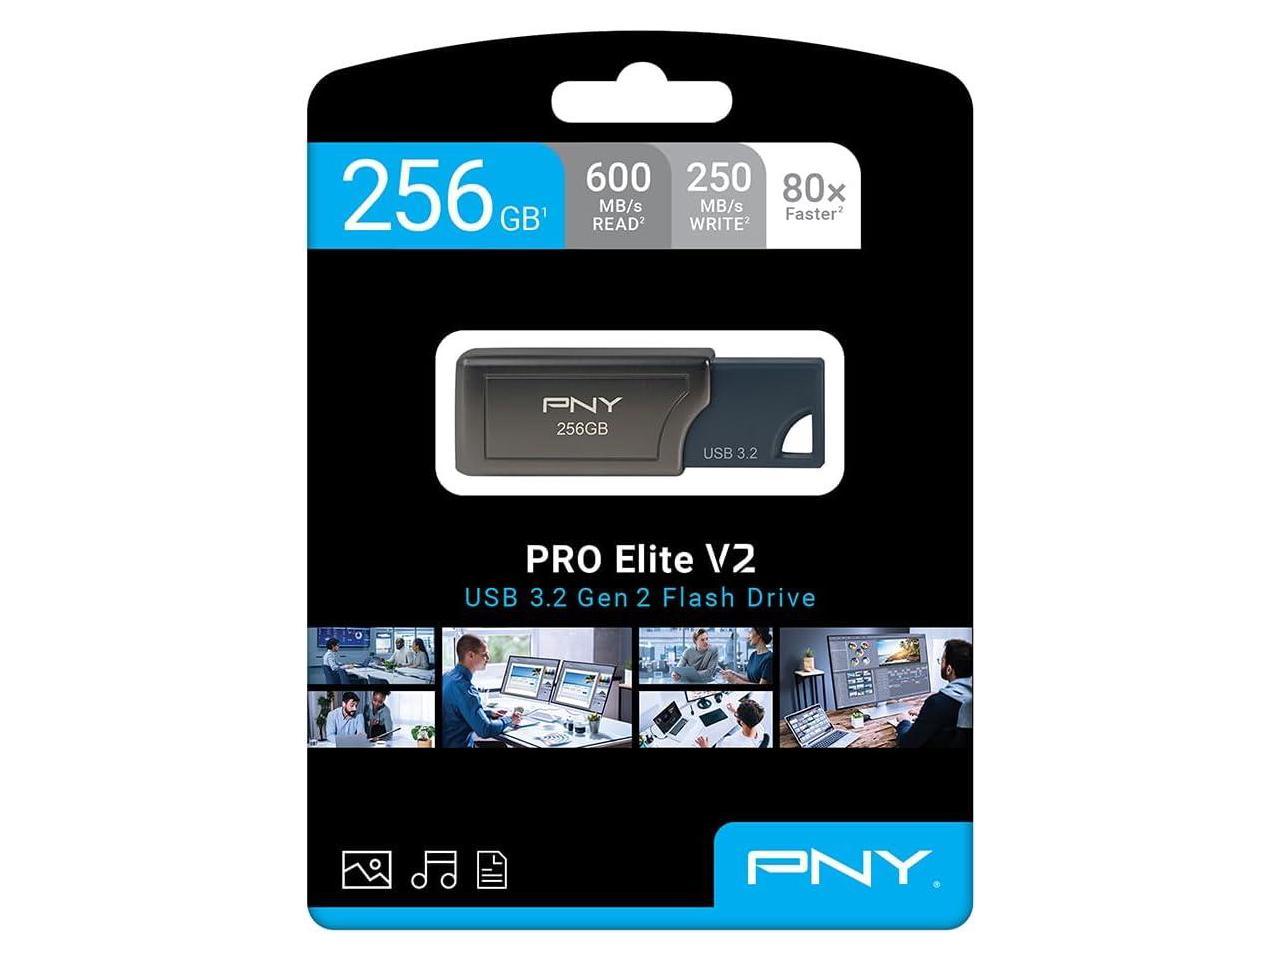 PNY PRO Elite V2 USB 3.2 Gen 2 Flash Drive - 256 GB - USB 3.2 (Gen 2) - 600 MB/s Read Speed - 250 MB/s Write Speed - Black - 2 Year Warranty - image 4 of 4